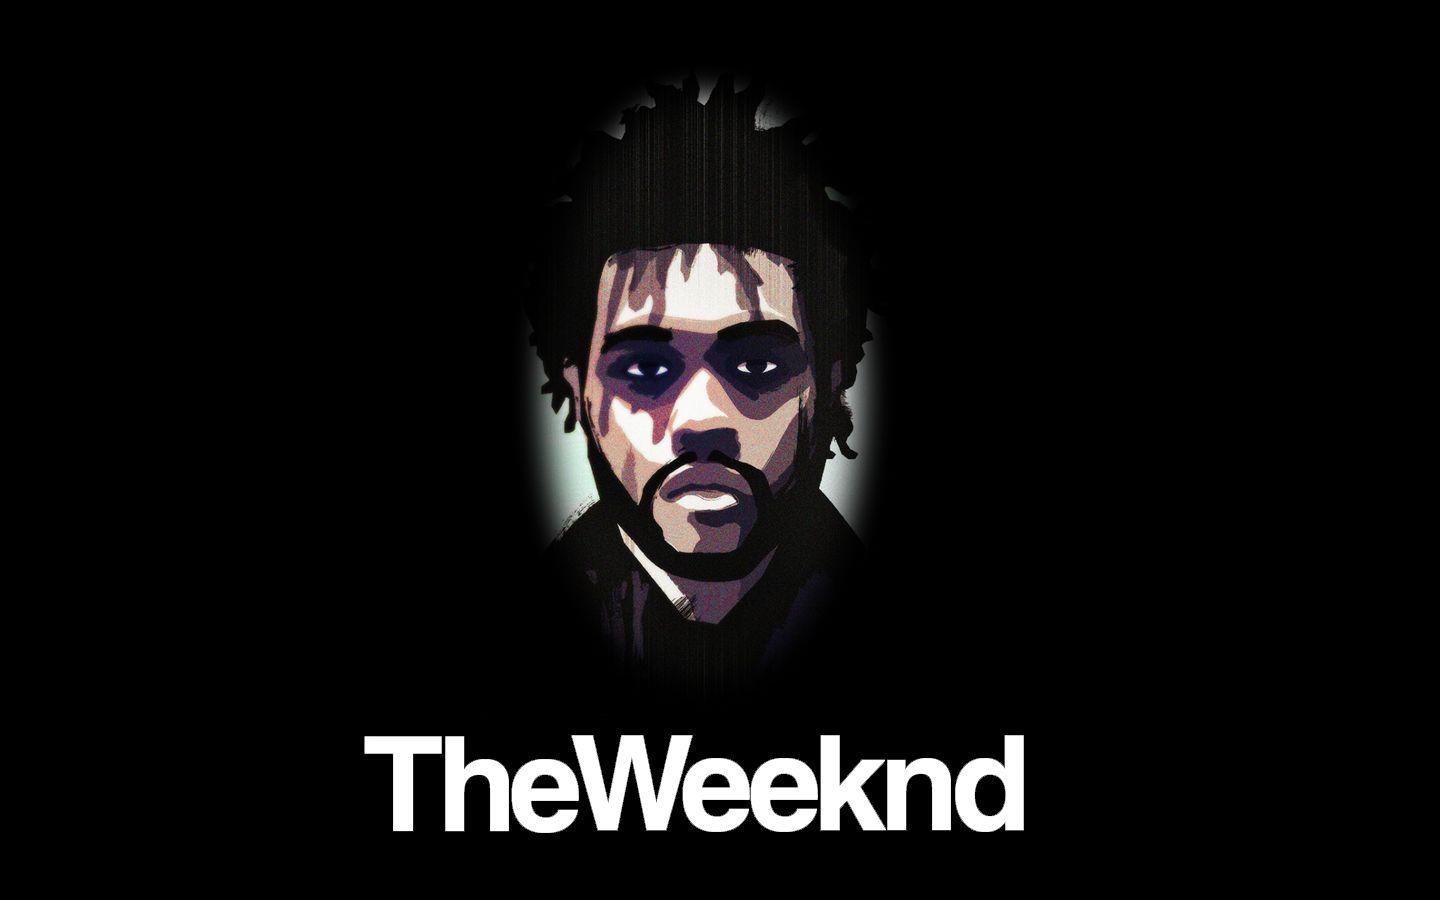 The Weeknd XO Wallpaper